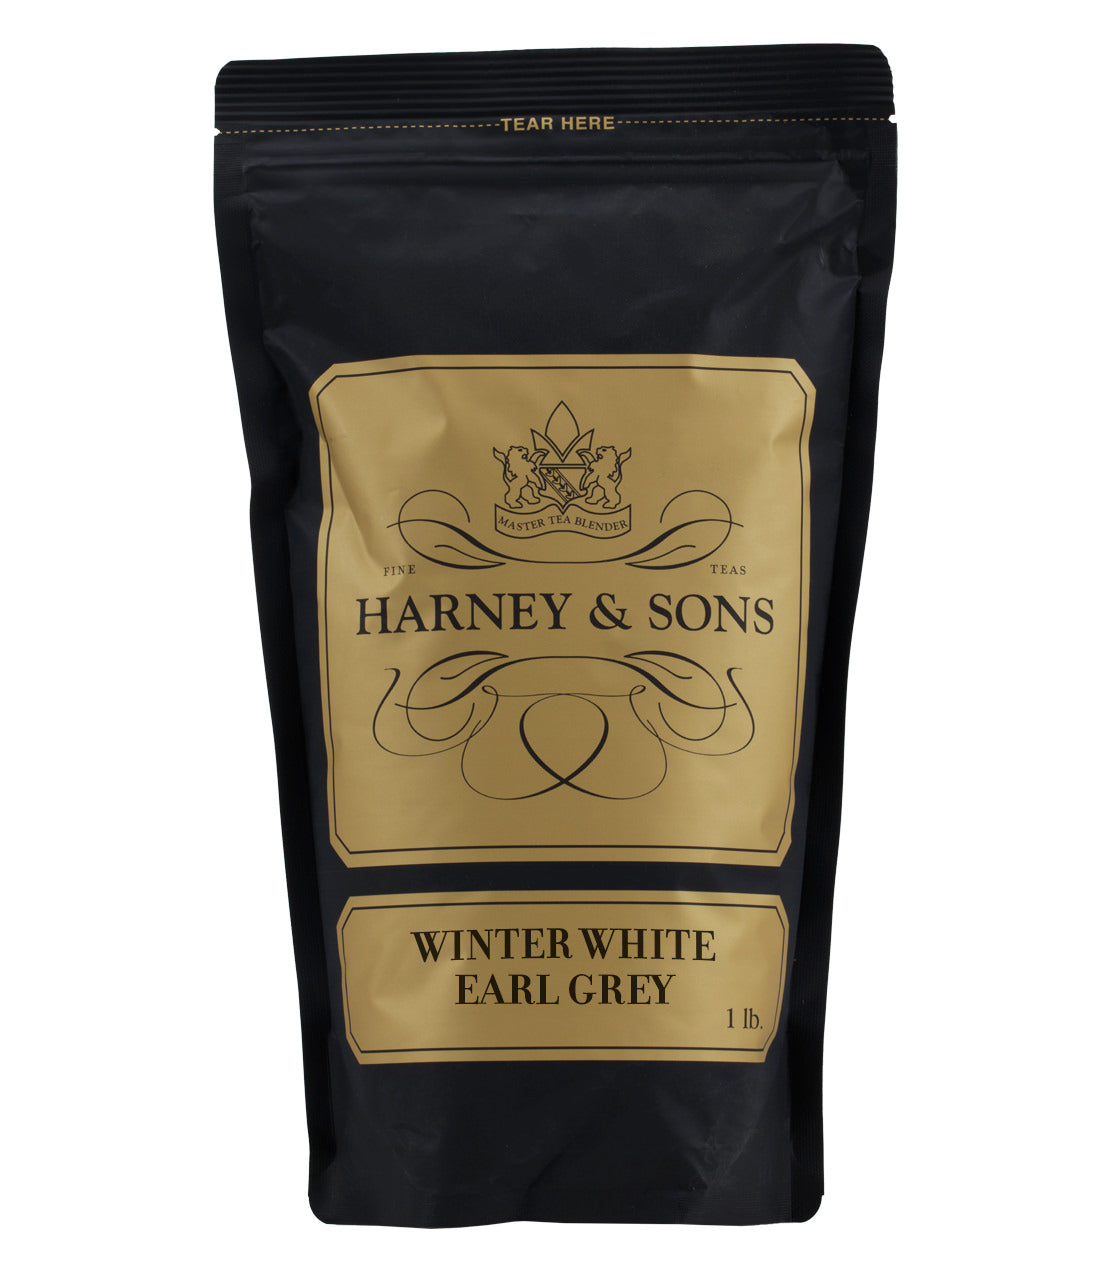 Winter White Earl Grey - Loose 1 lb. Bag - Harney & Sons Fine Teas